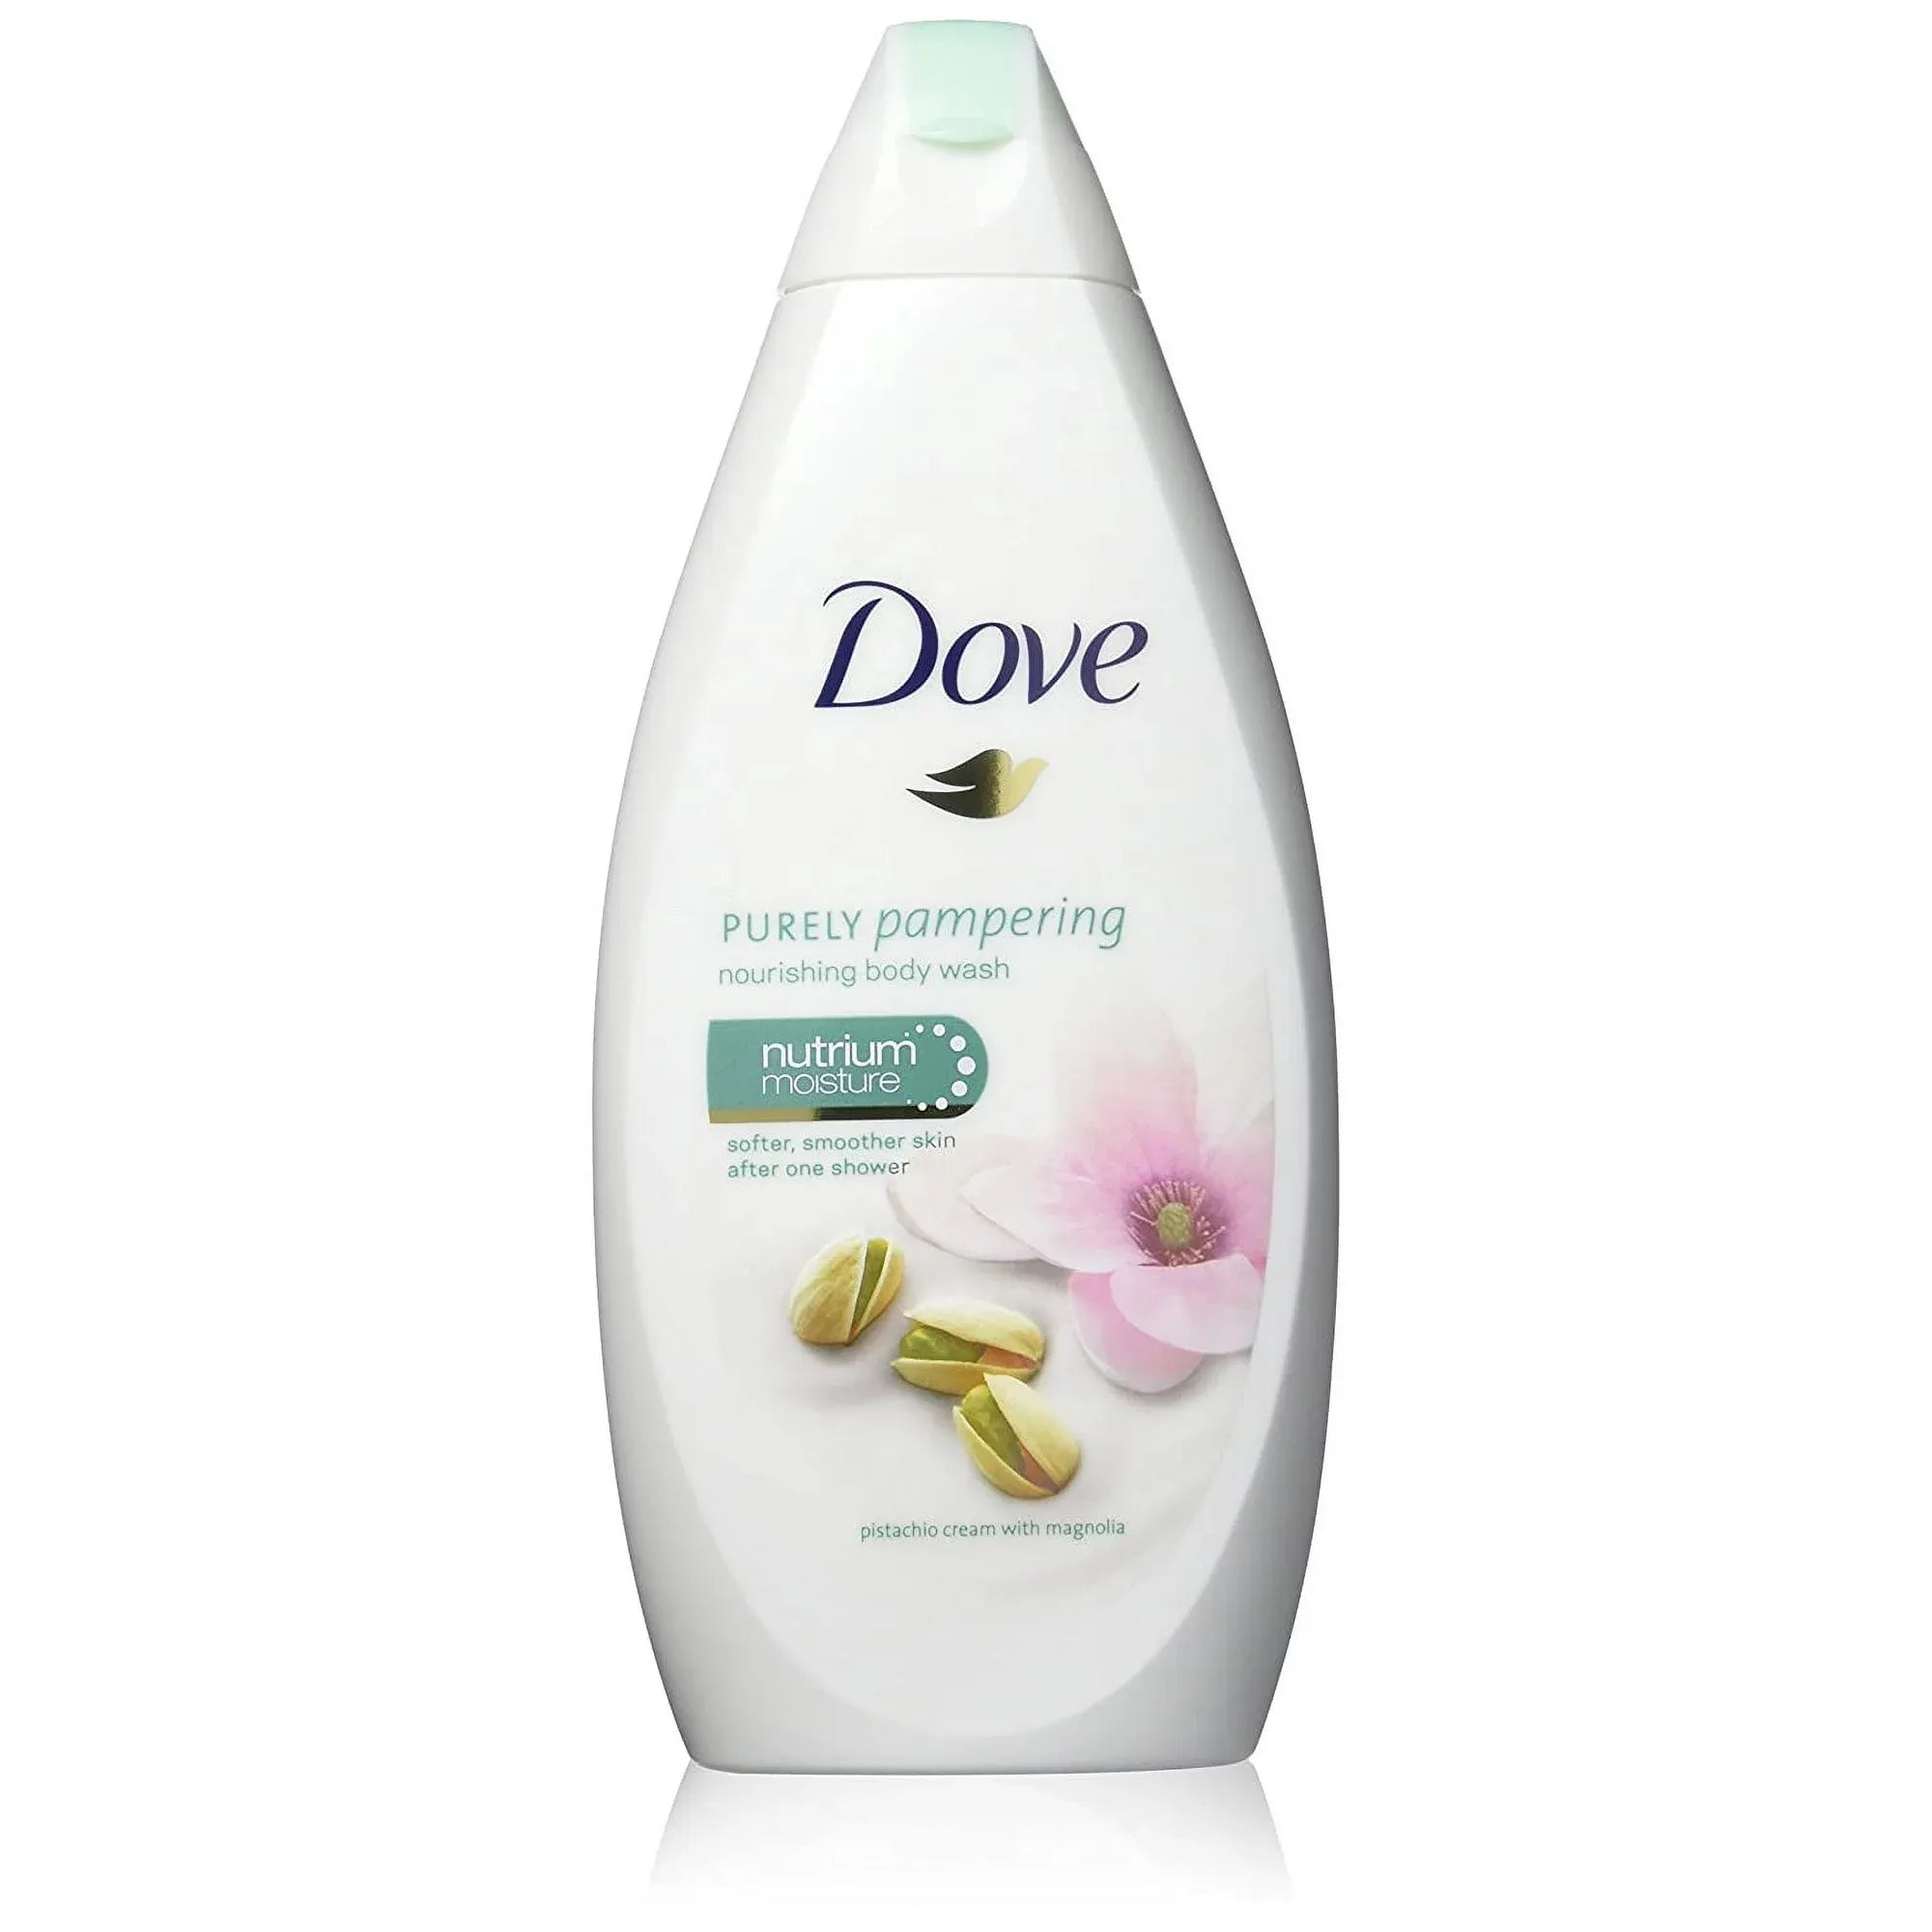 Dove Purely Pampering Body Wash, Pistachio Cream with Magnolia